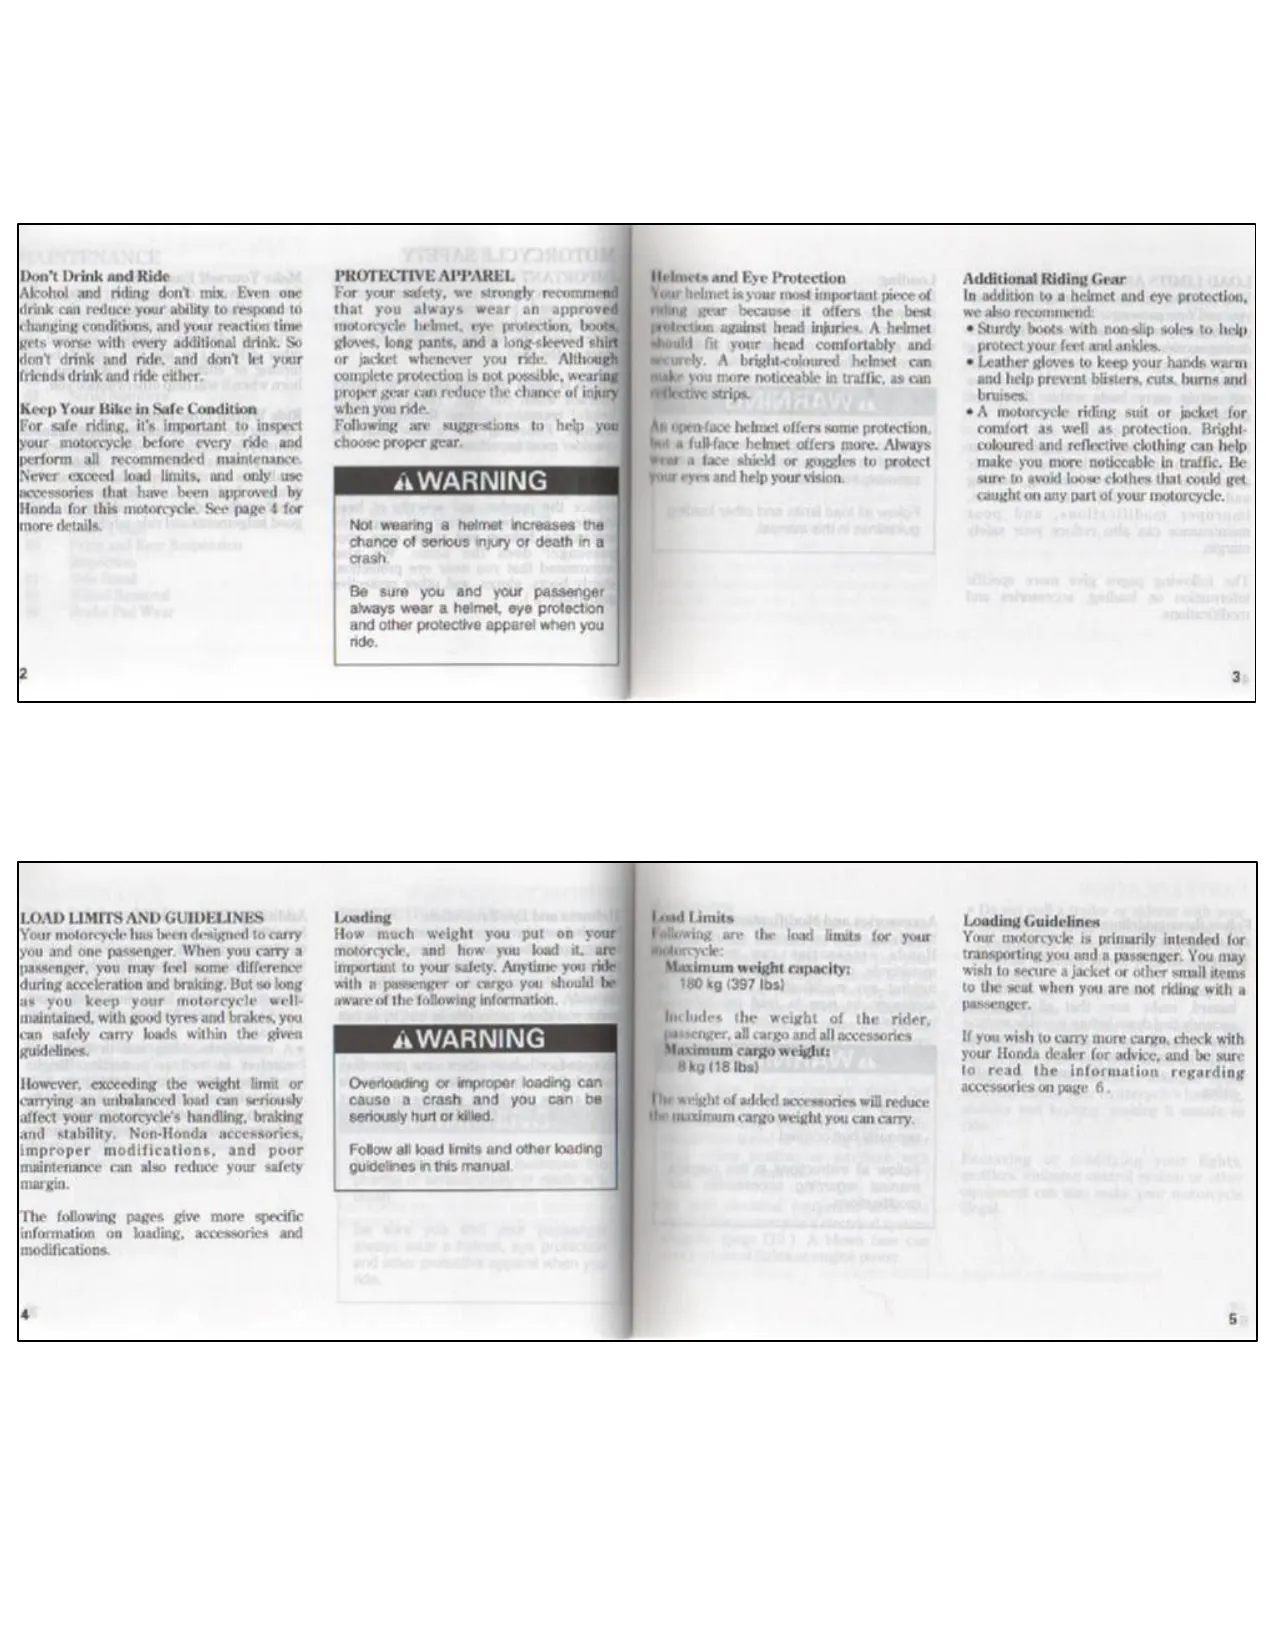 Honda CBR125R owners manual Preview image 5